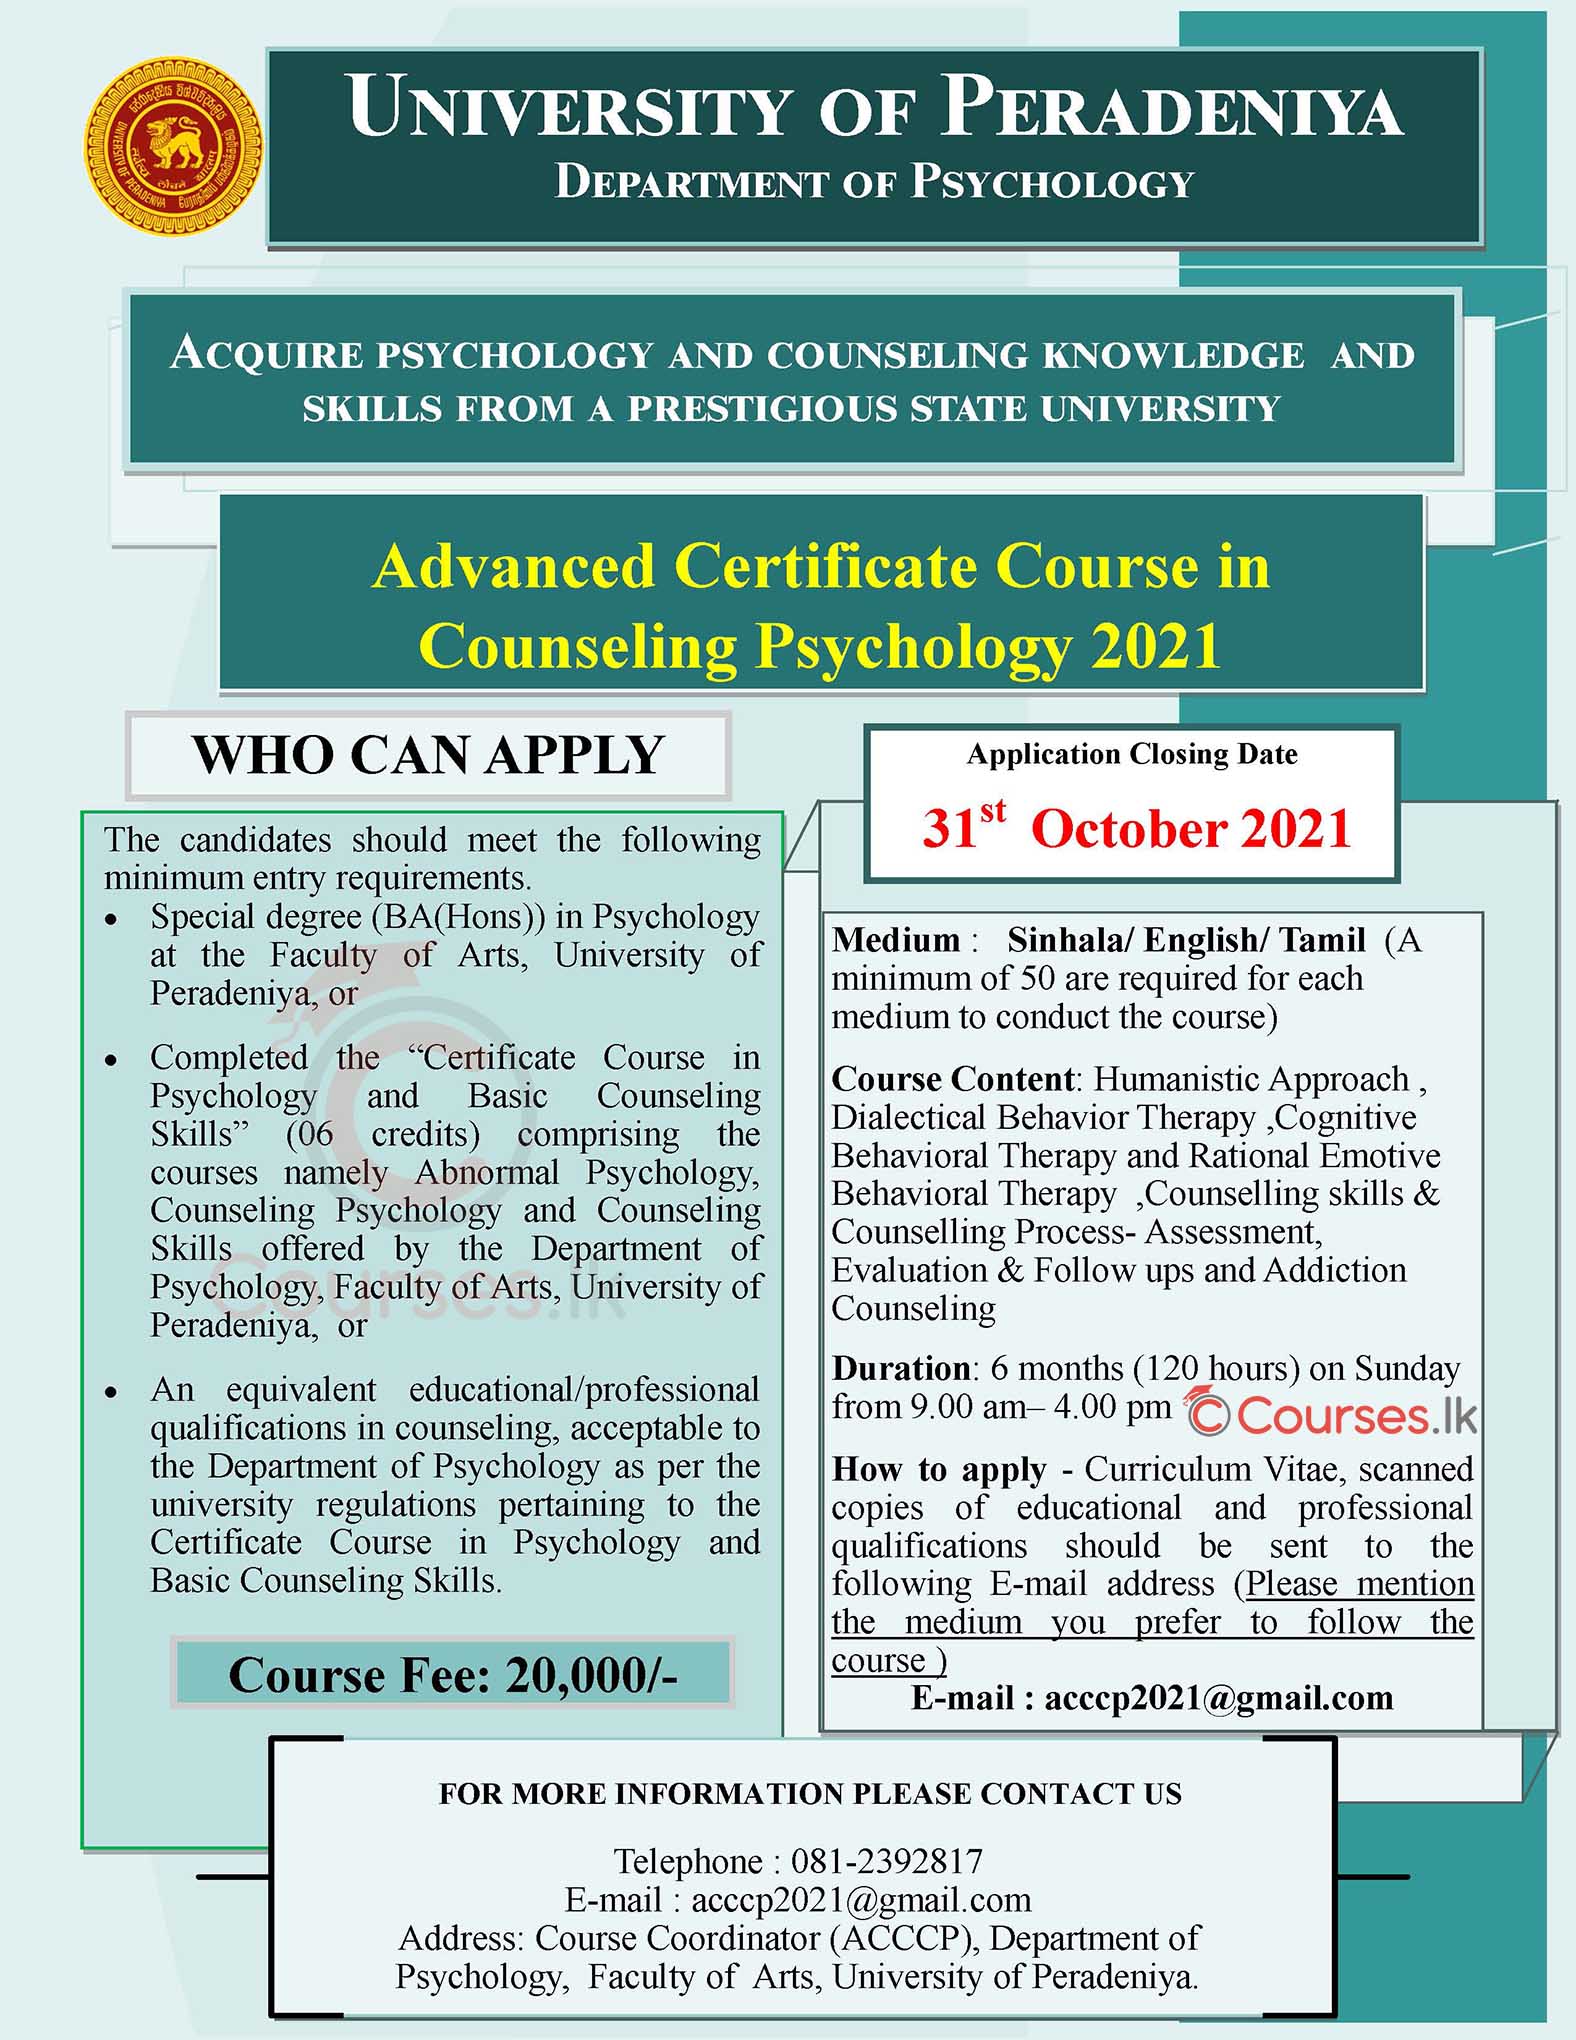 Advanced Certificate in Counseling Psychology 2021 - University of Peradeniya